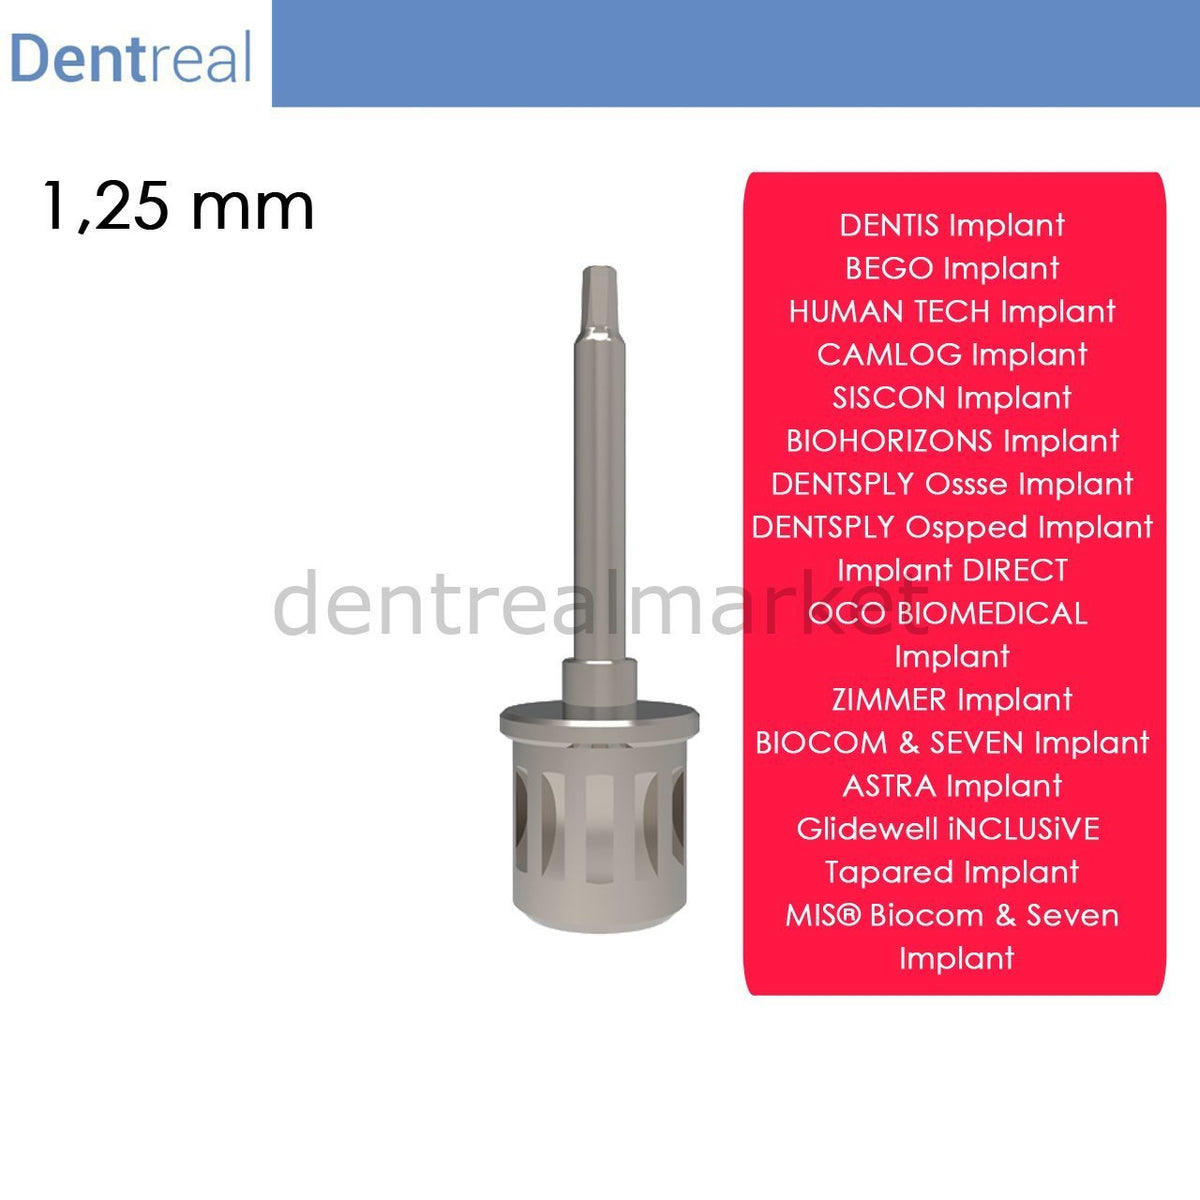 DentrealStore - Dentreal Screwdriver for Dentis Implant - 1,25 mm Hex Driver